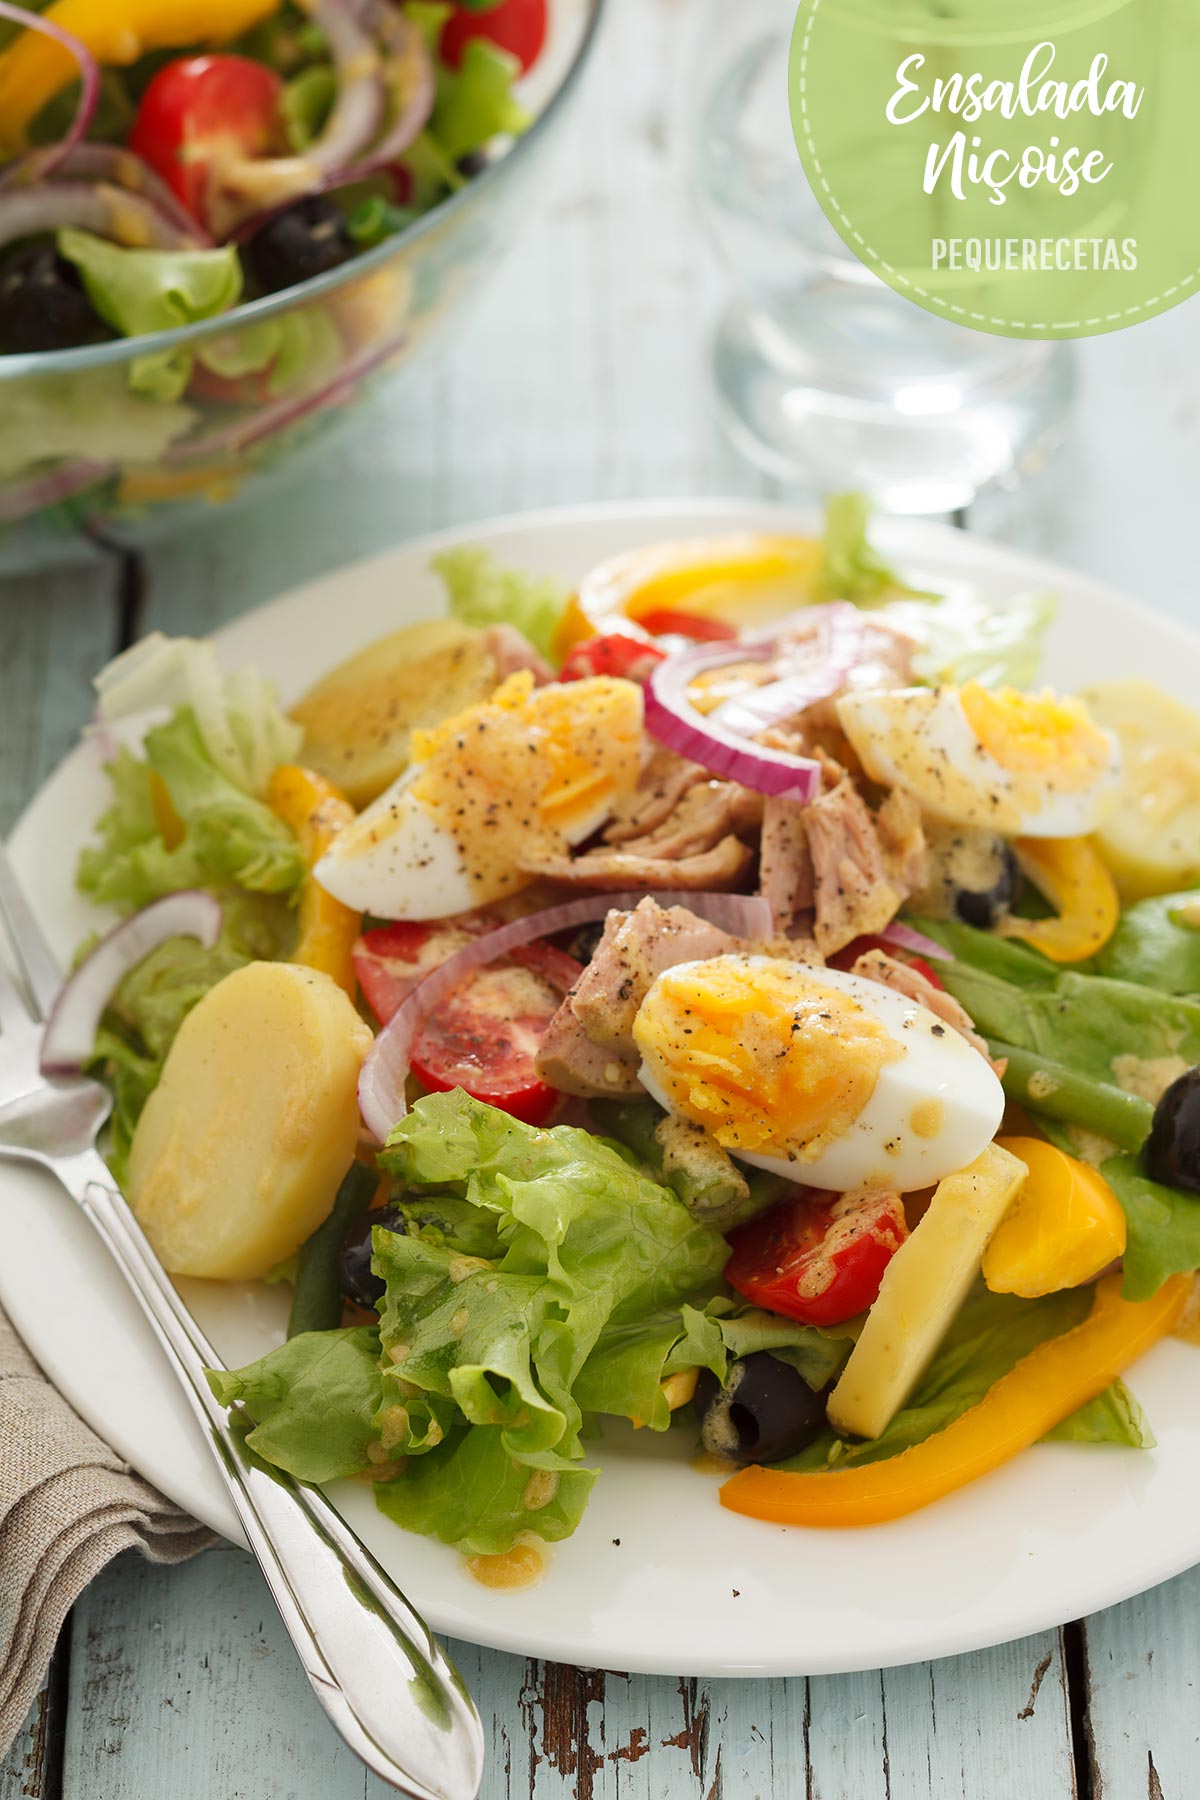 nicoise salad or nizarda salad